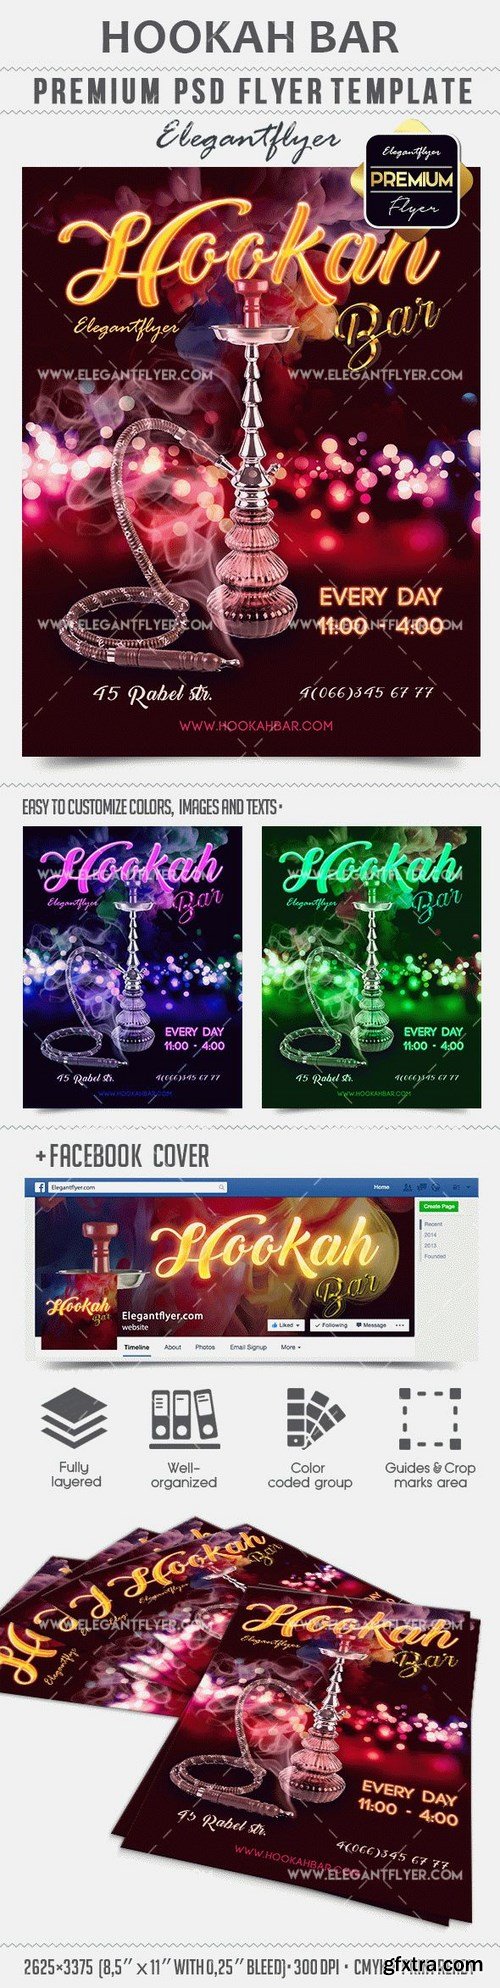 Hookah Bar – Premium PSD Template + Facebook cover